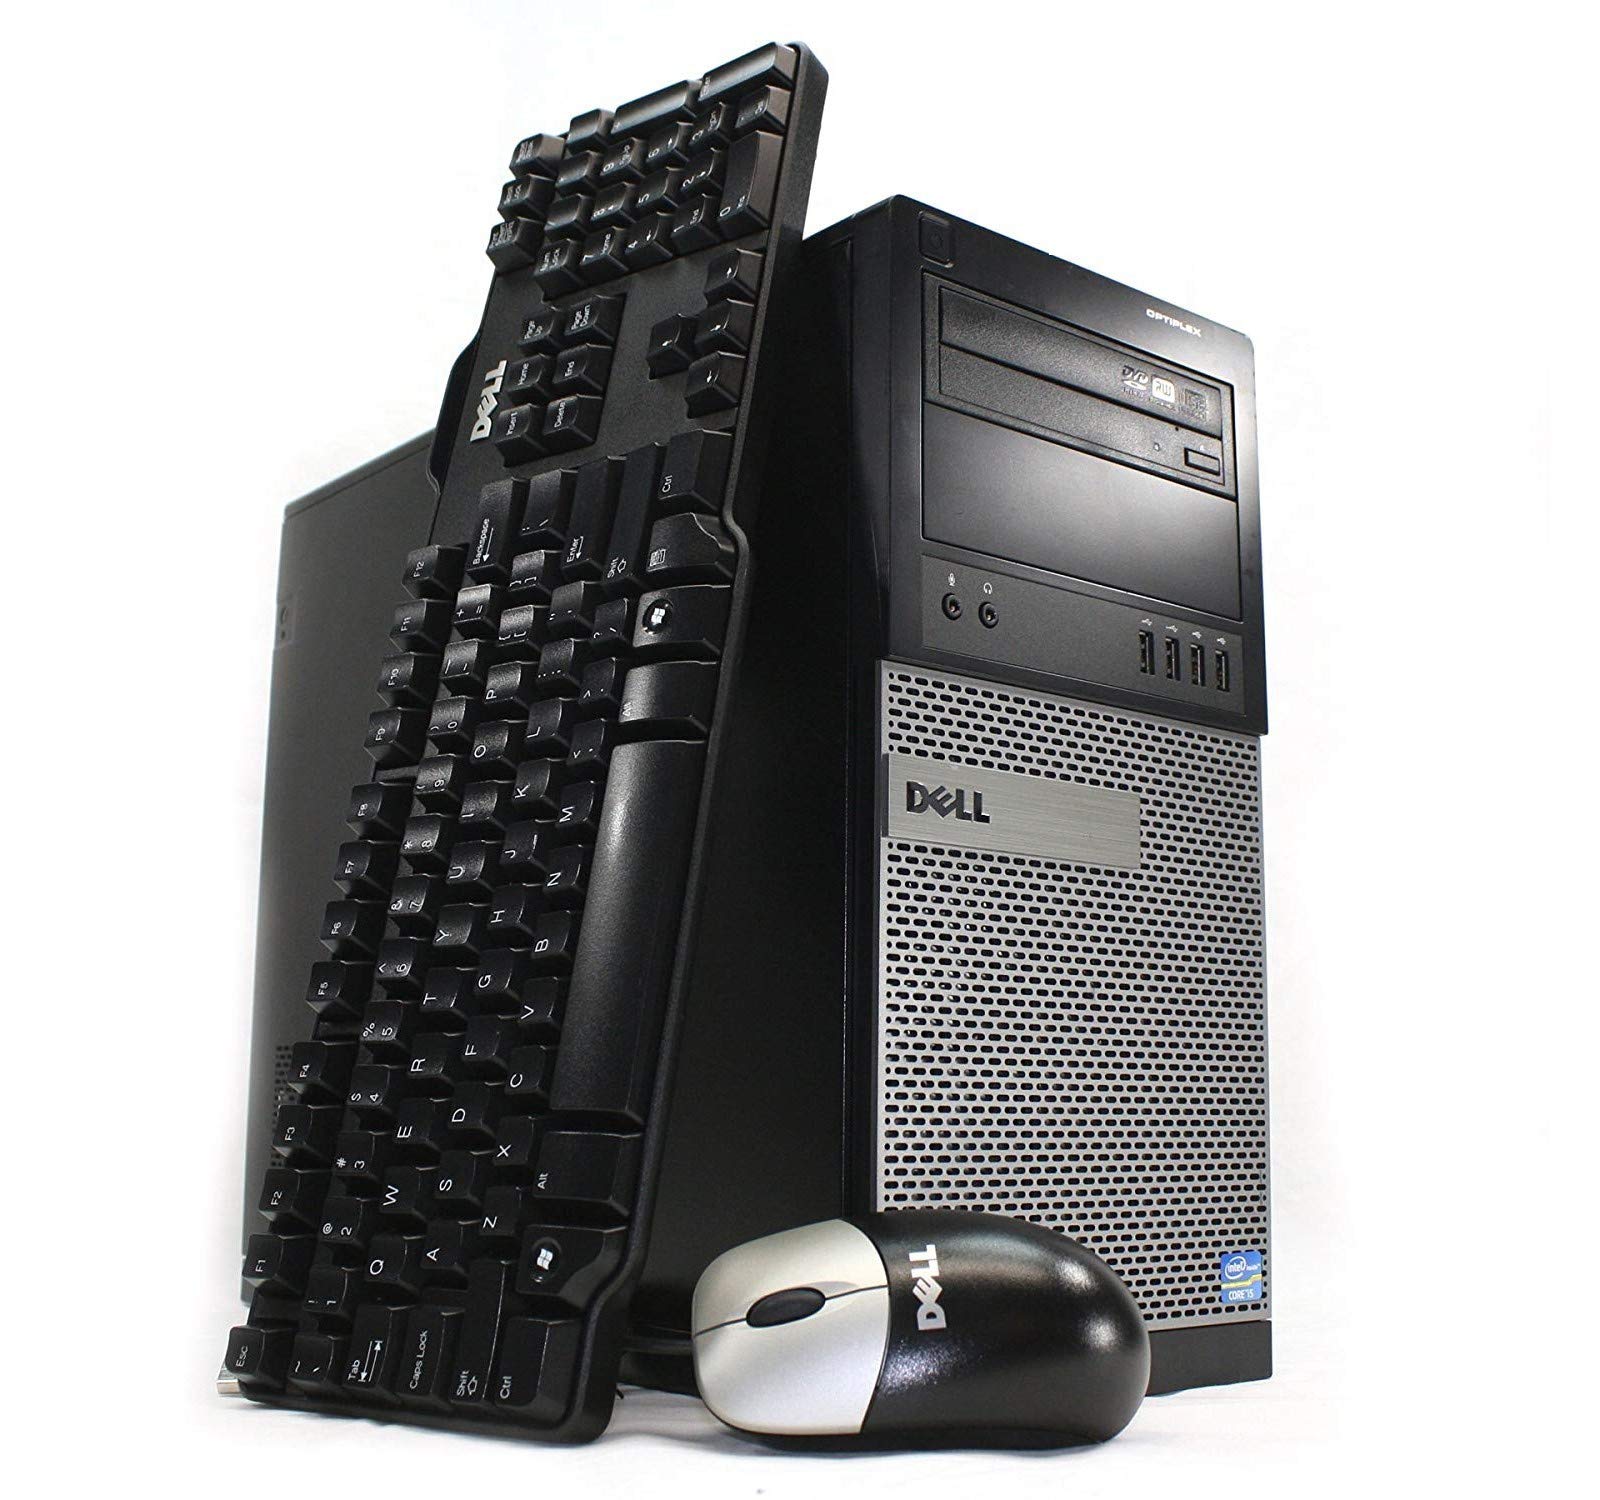 Dell Optiplex 9020 Desktop Tower PC, Intel Quad Core i5 (3.20GHz) Processor, 16GB RAM, 2TB Hard Drive, Windows 10 Professional, DVD, HDMI, Bluetooth, Keyboard, Mouse, WiFi (Renewed)